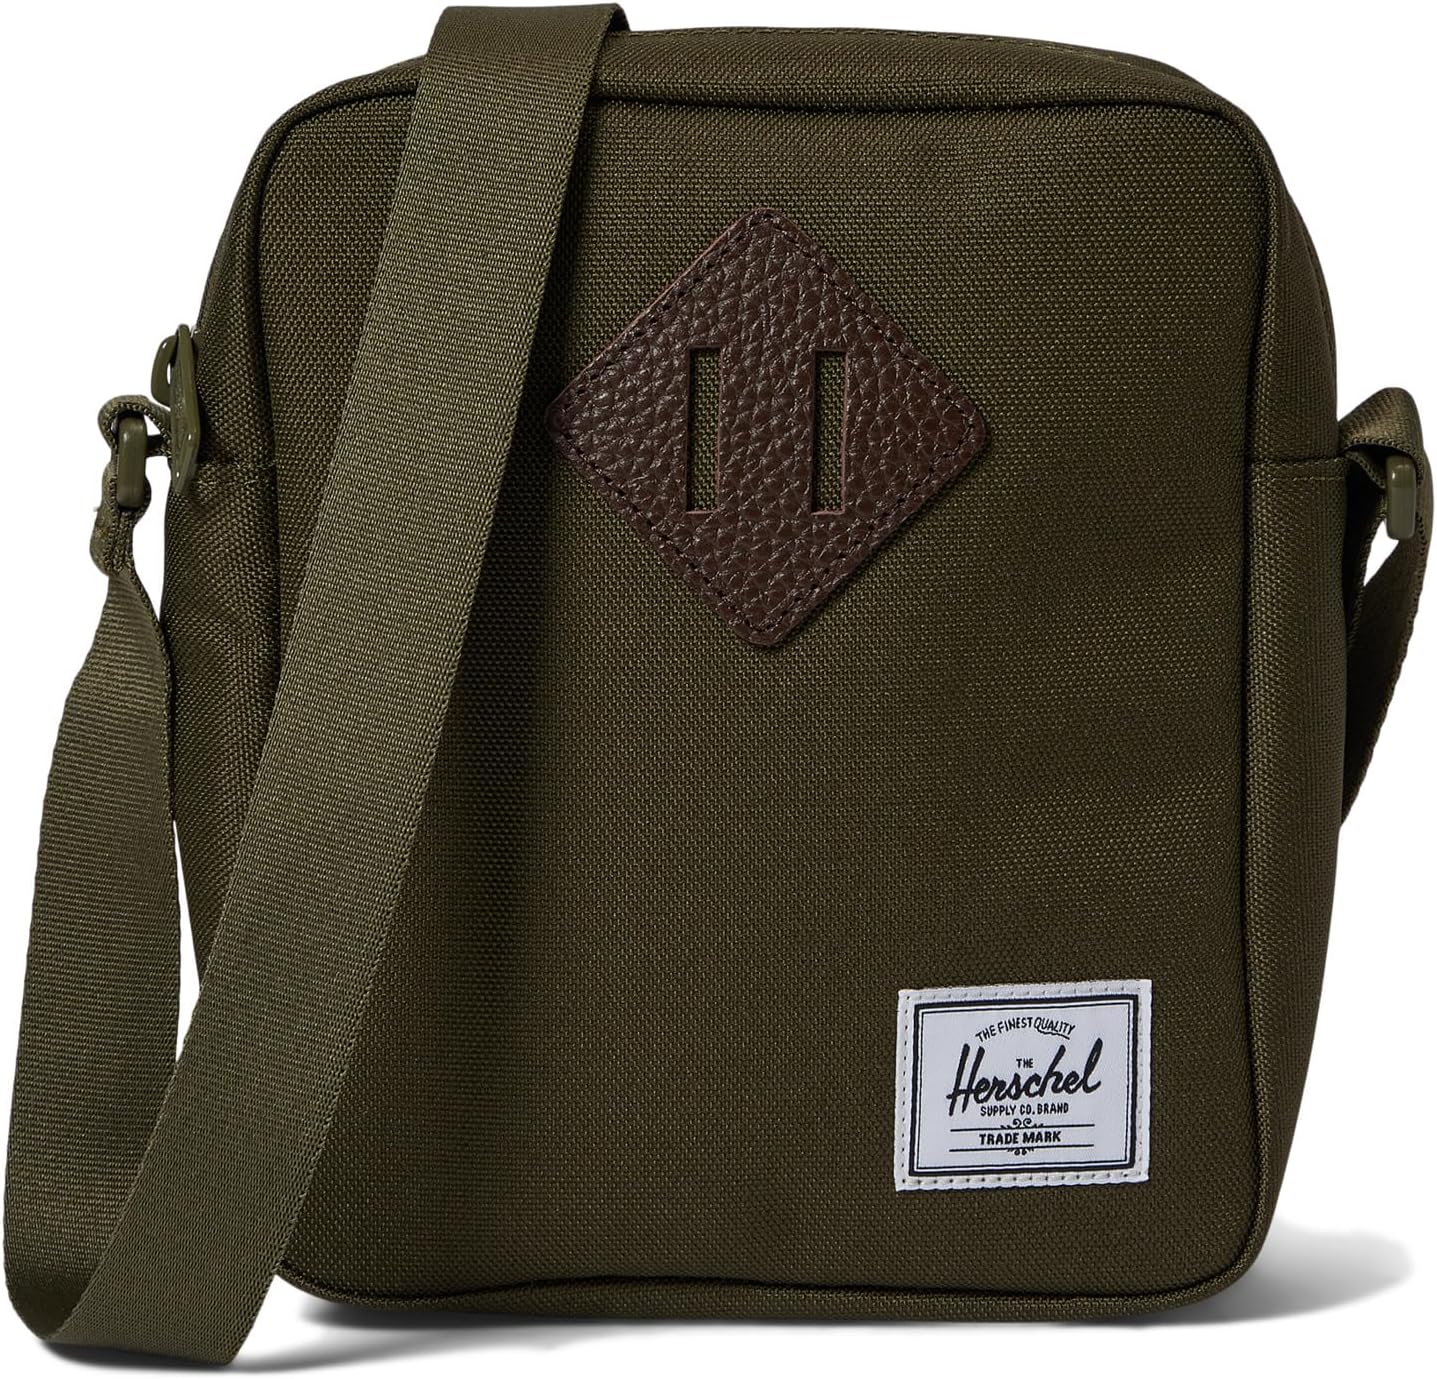 рюкзак retreat backpack herschel supply co цвет ivy green Сумка Heritage Crossbody Herschel Supply Co., цвет Ivy Green